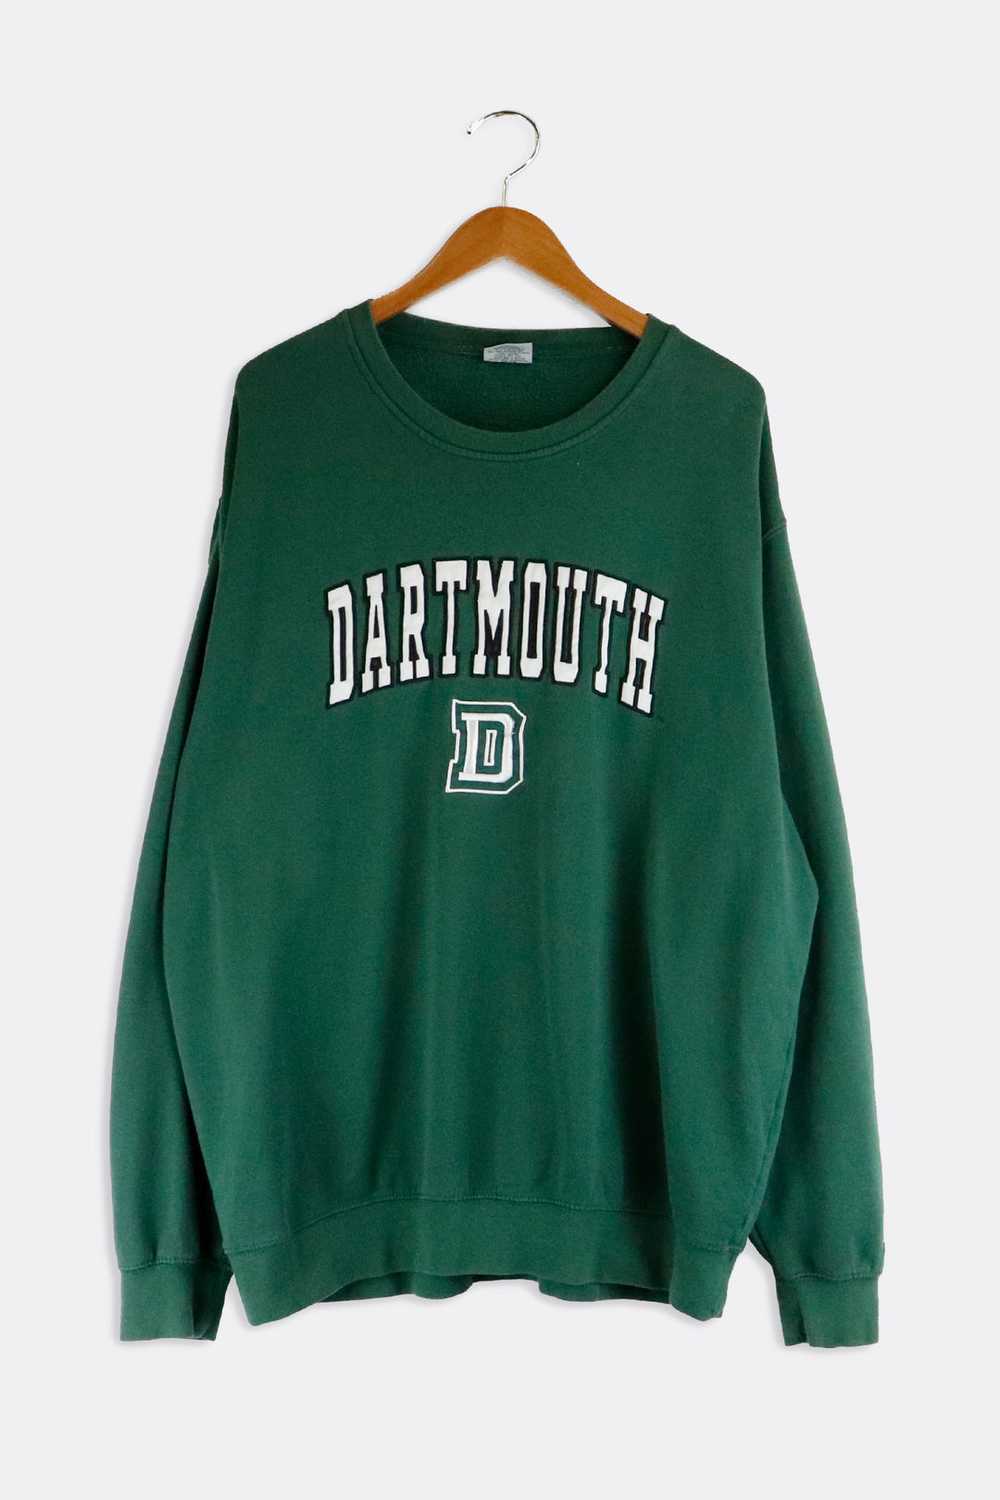 Vintage Dartmouth Embroidered Sweatshirt Sz 2XL - image 1